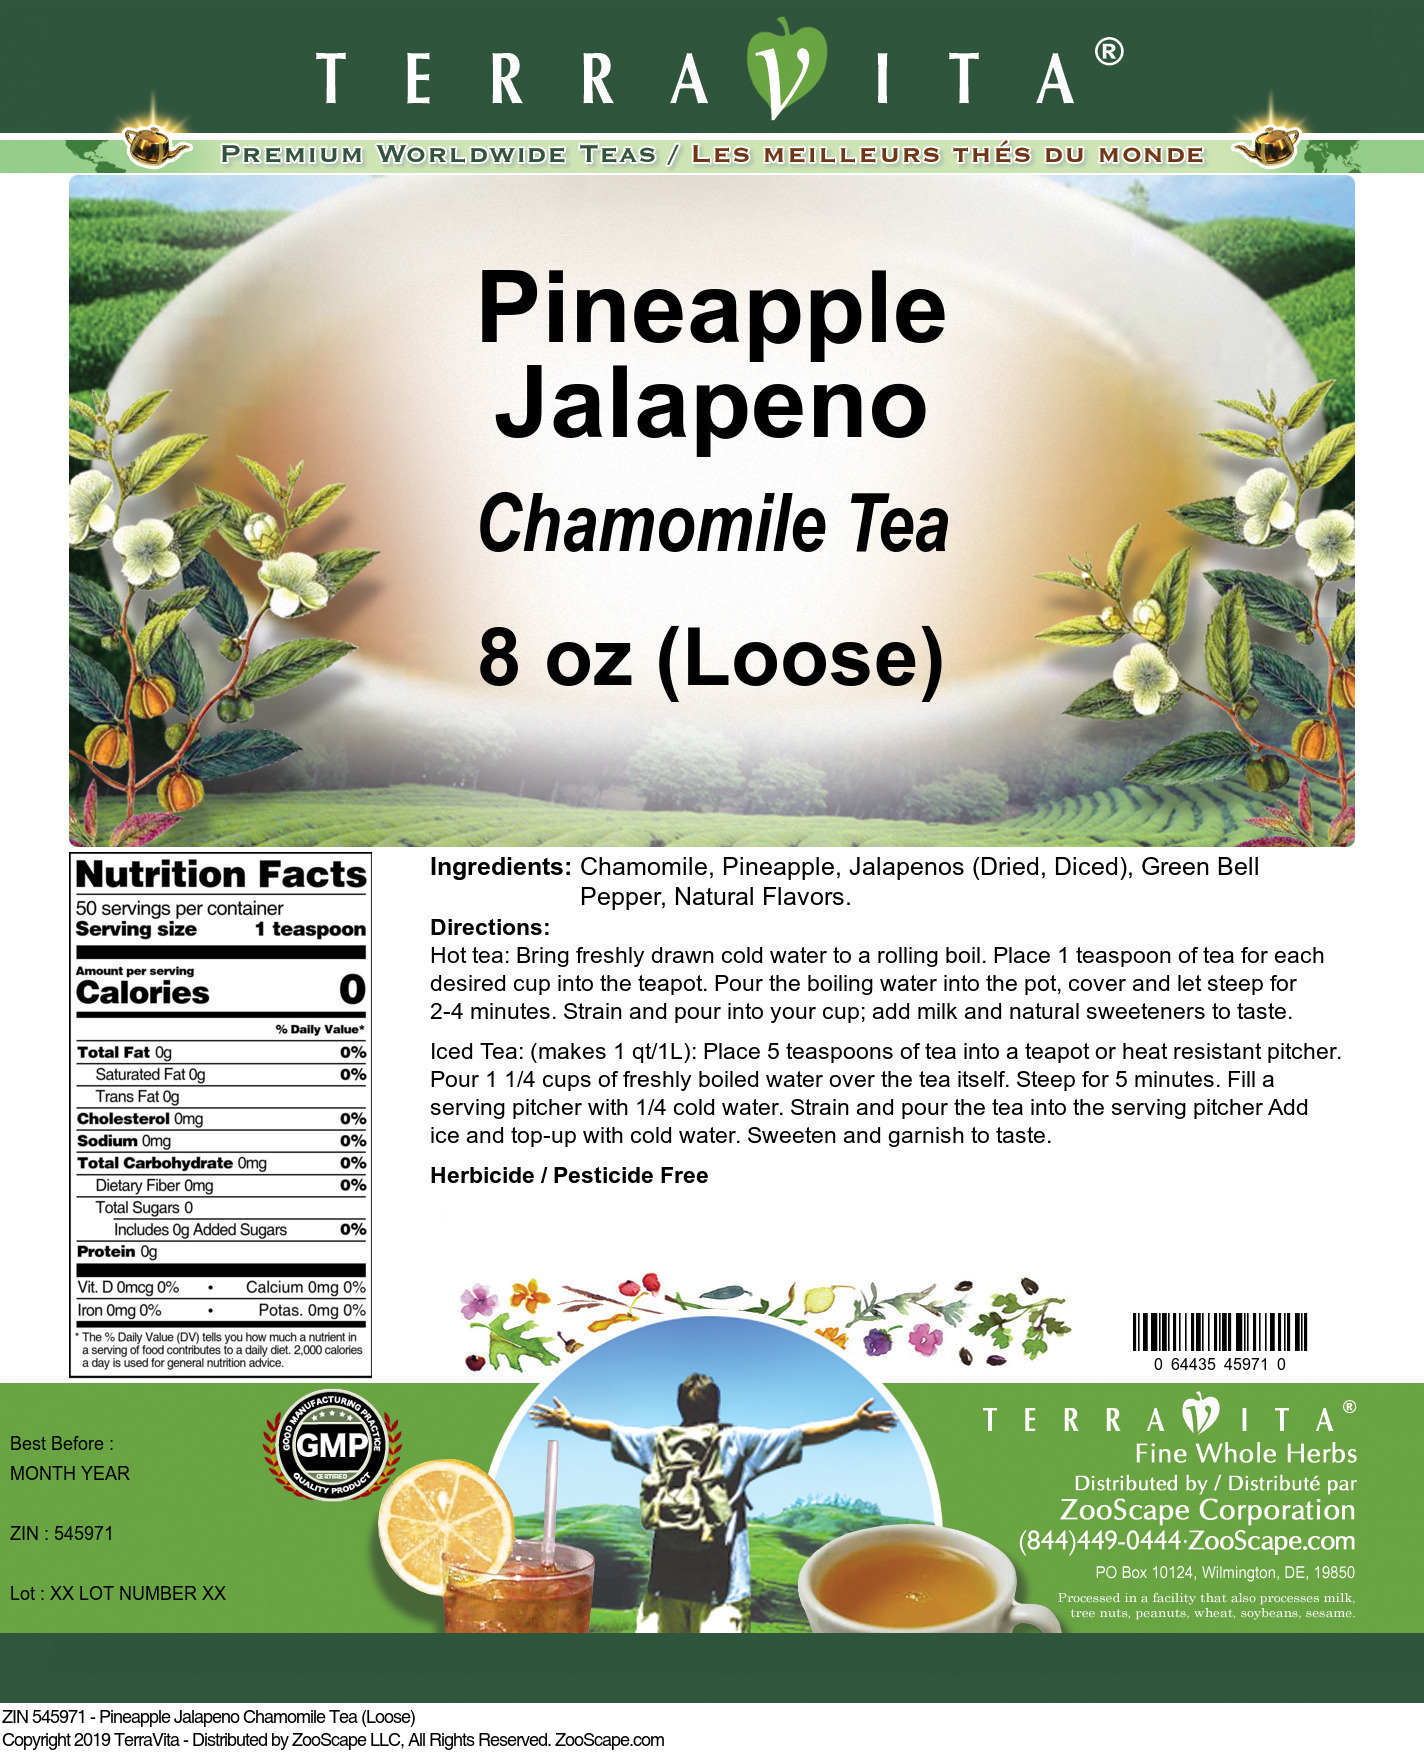 Pineapple Jalapeno Chamomile Tea (Loose) - Label